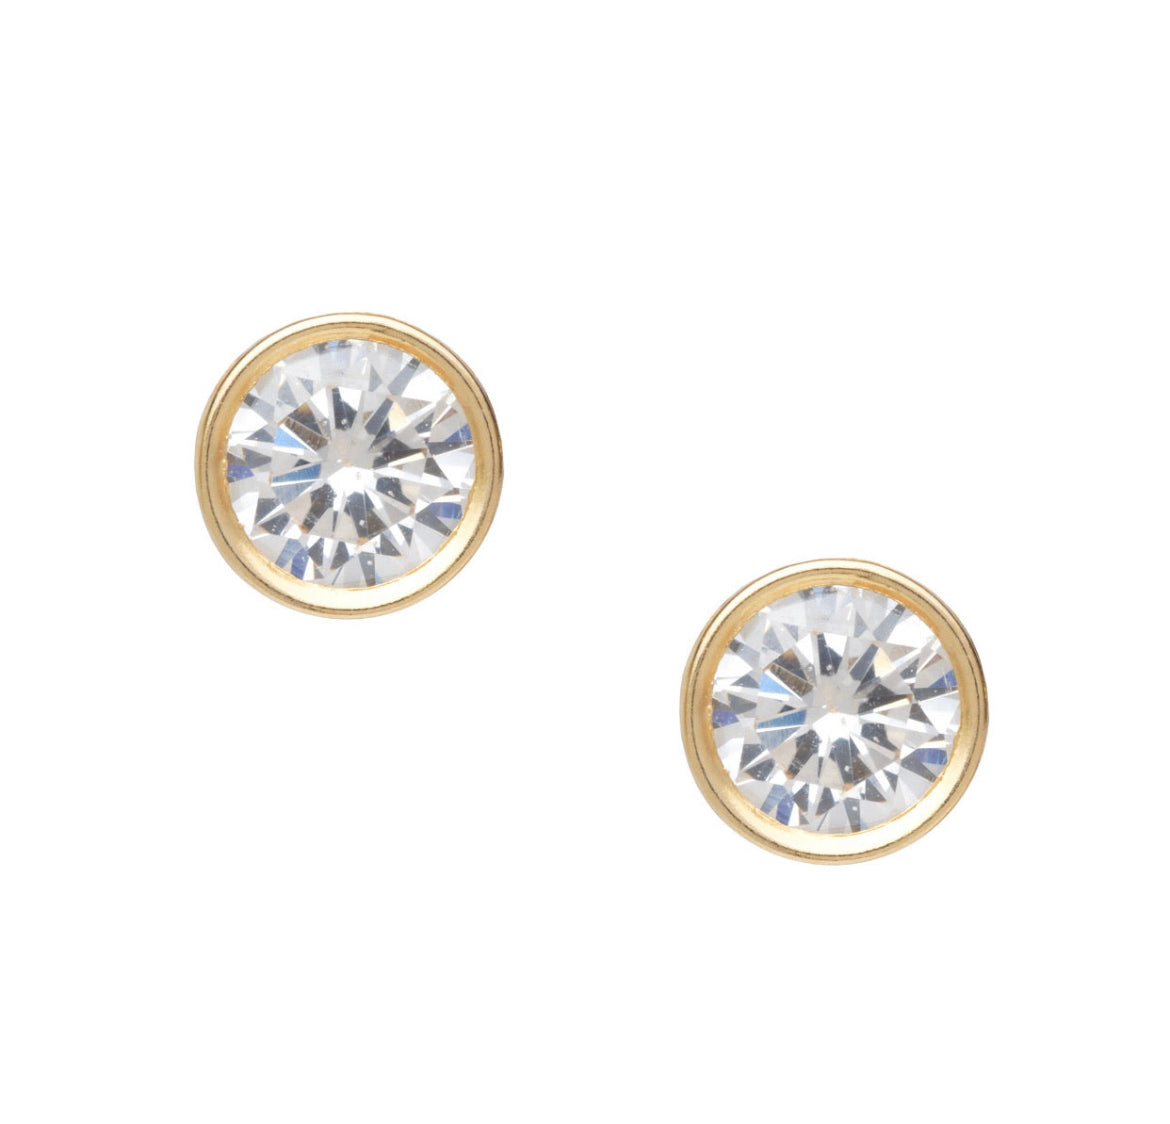 CZ gold-filled stud earrings